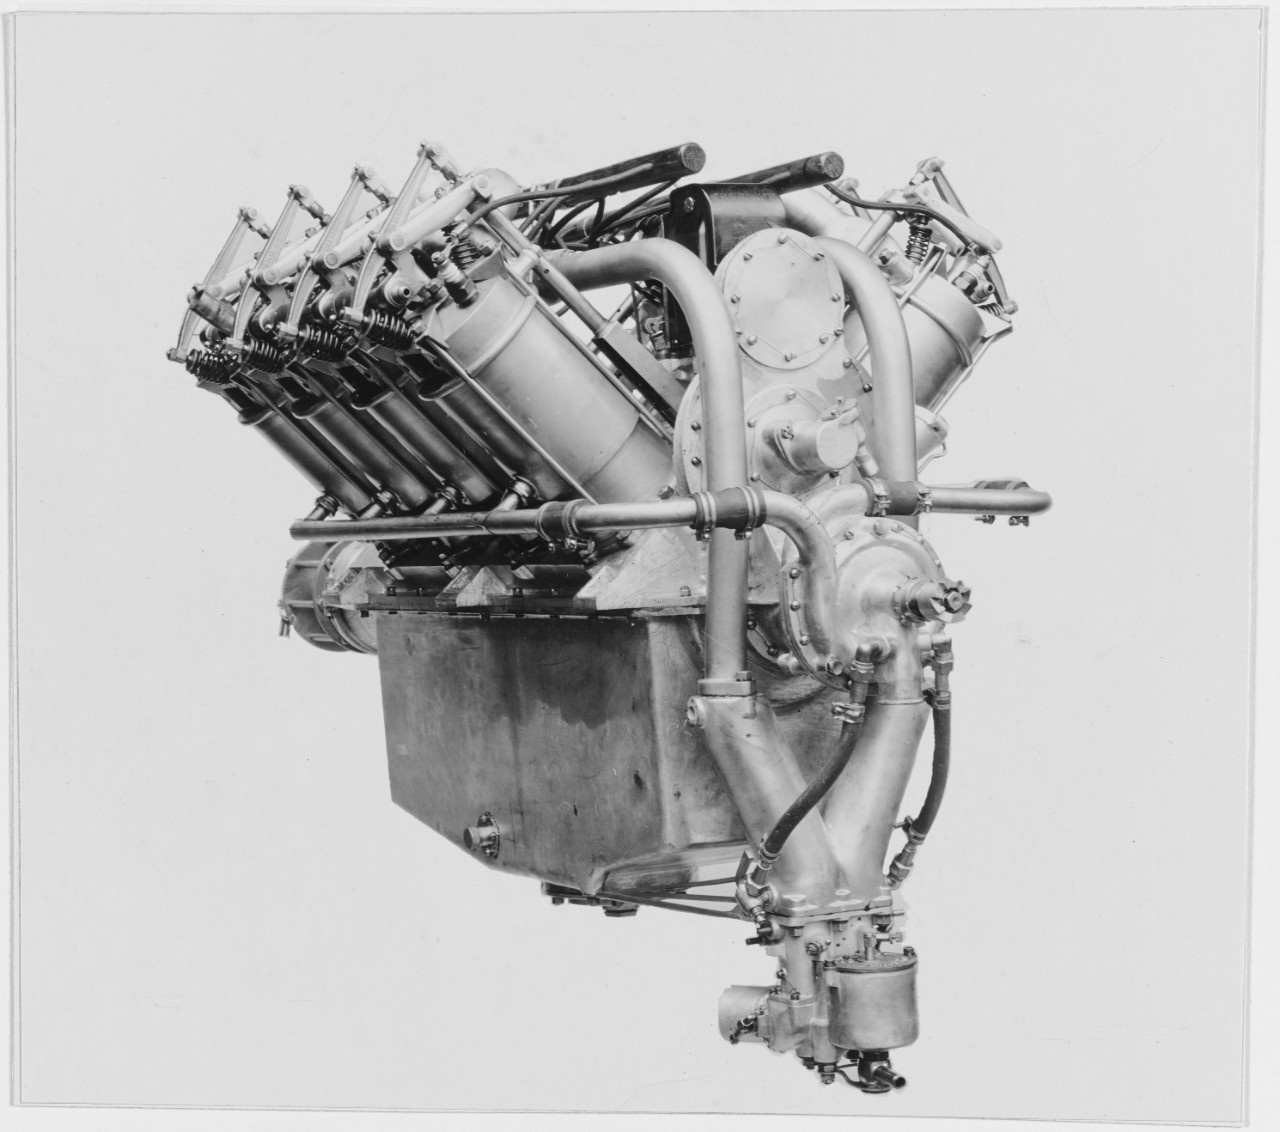 Curtiss OXX 8-cylinder "V" engine